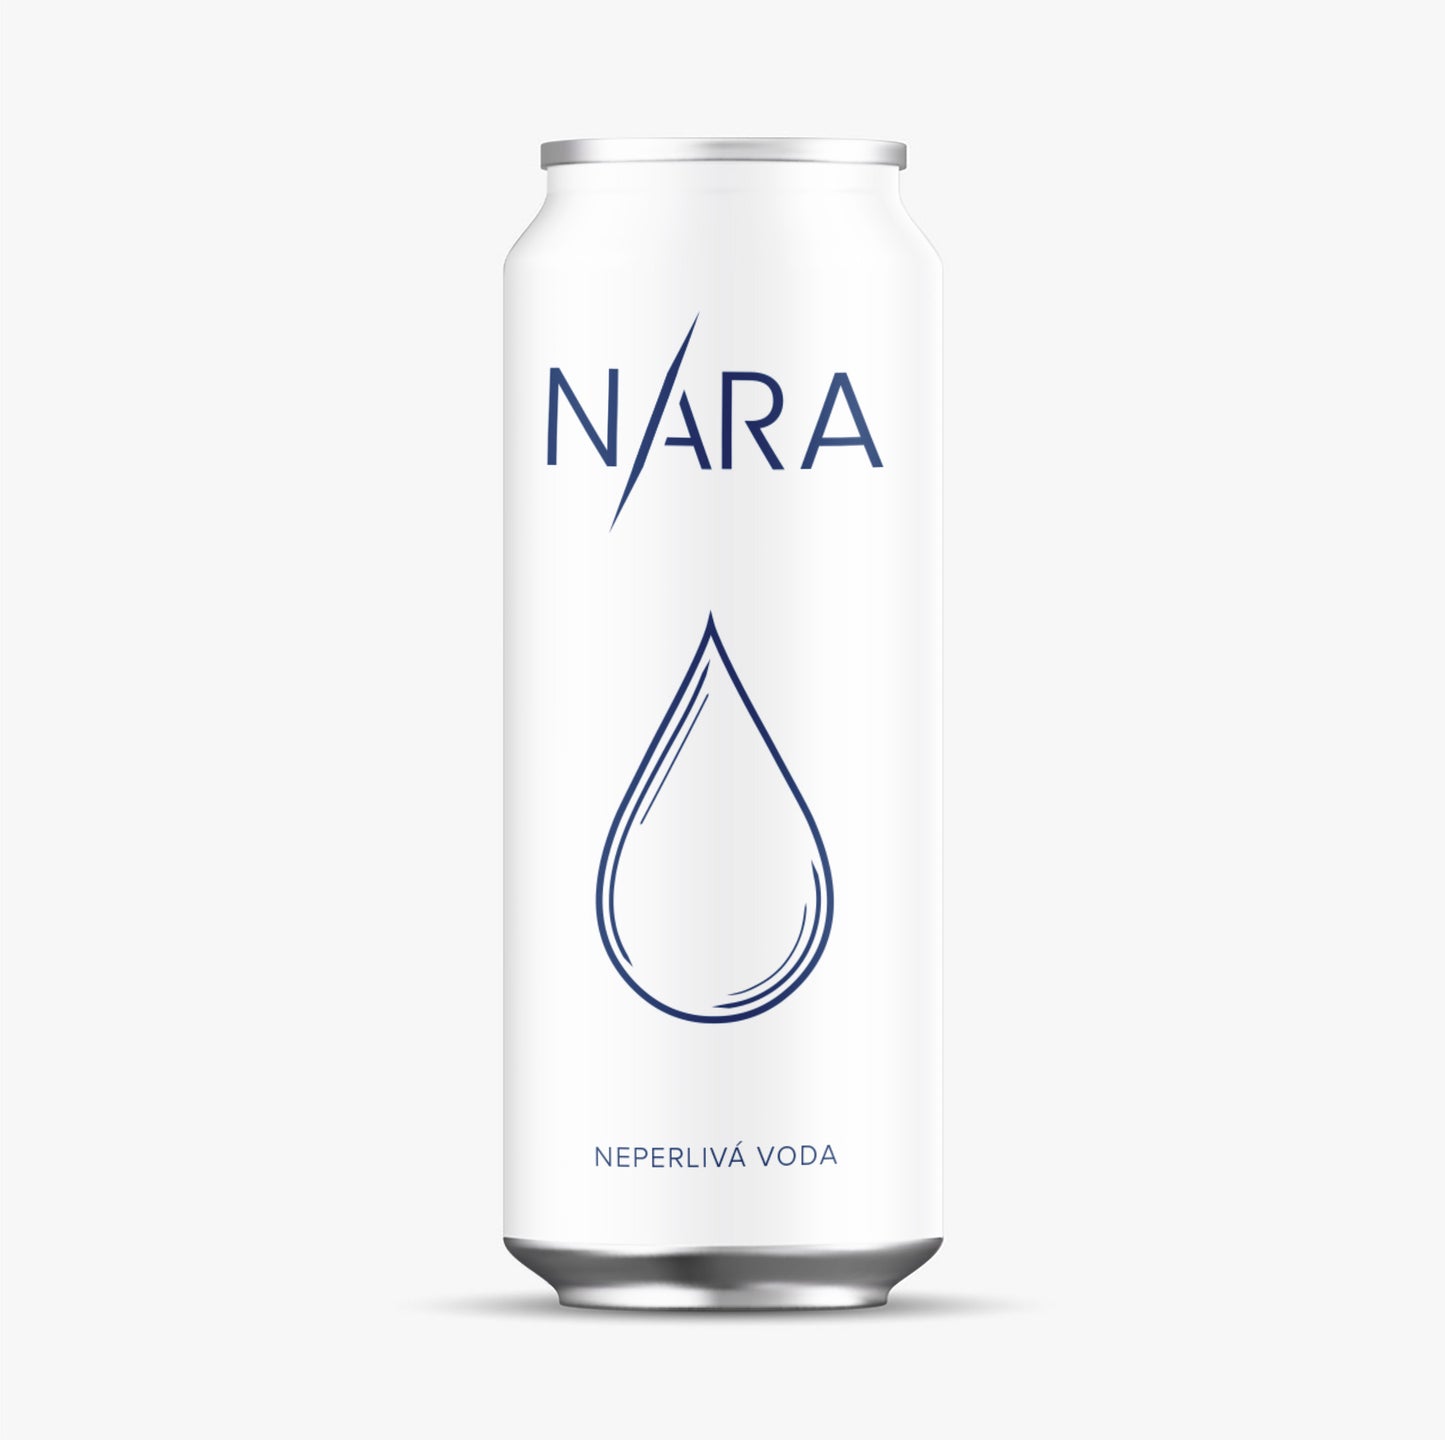 Nara - Neperlivá voda